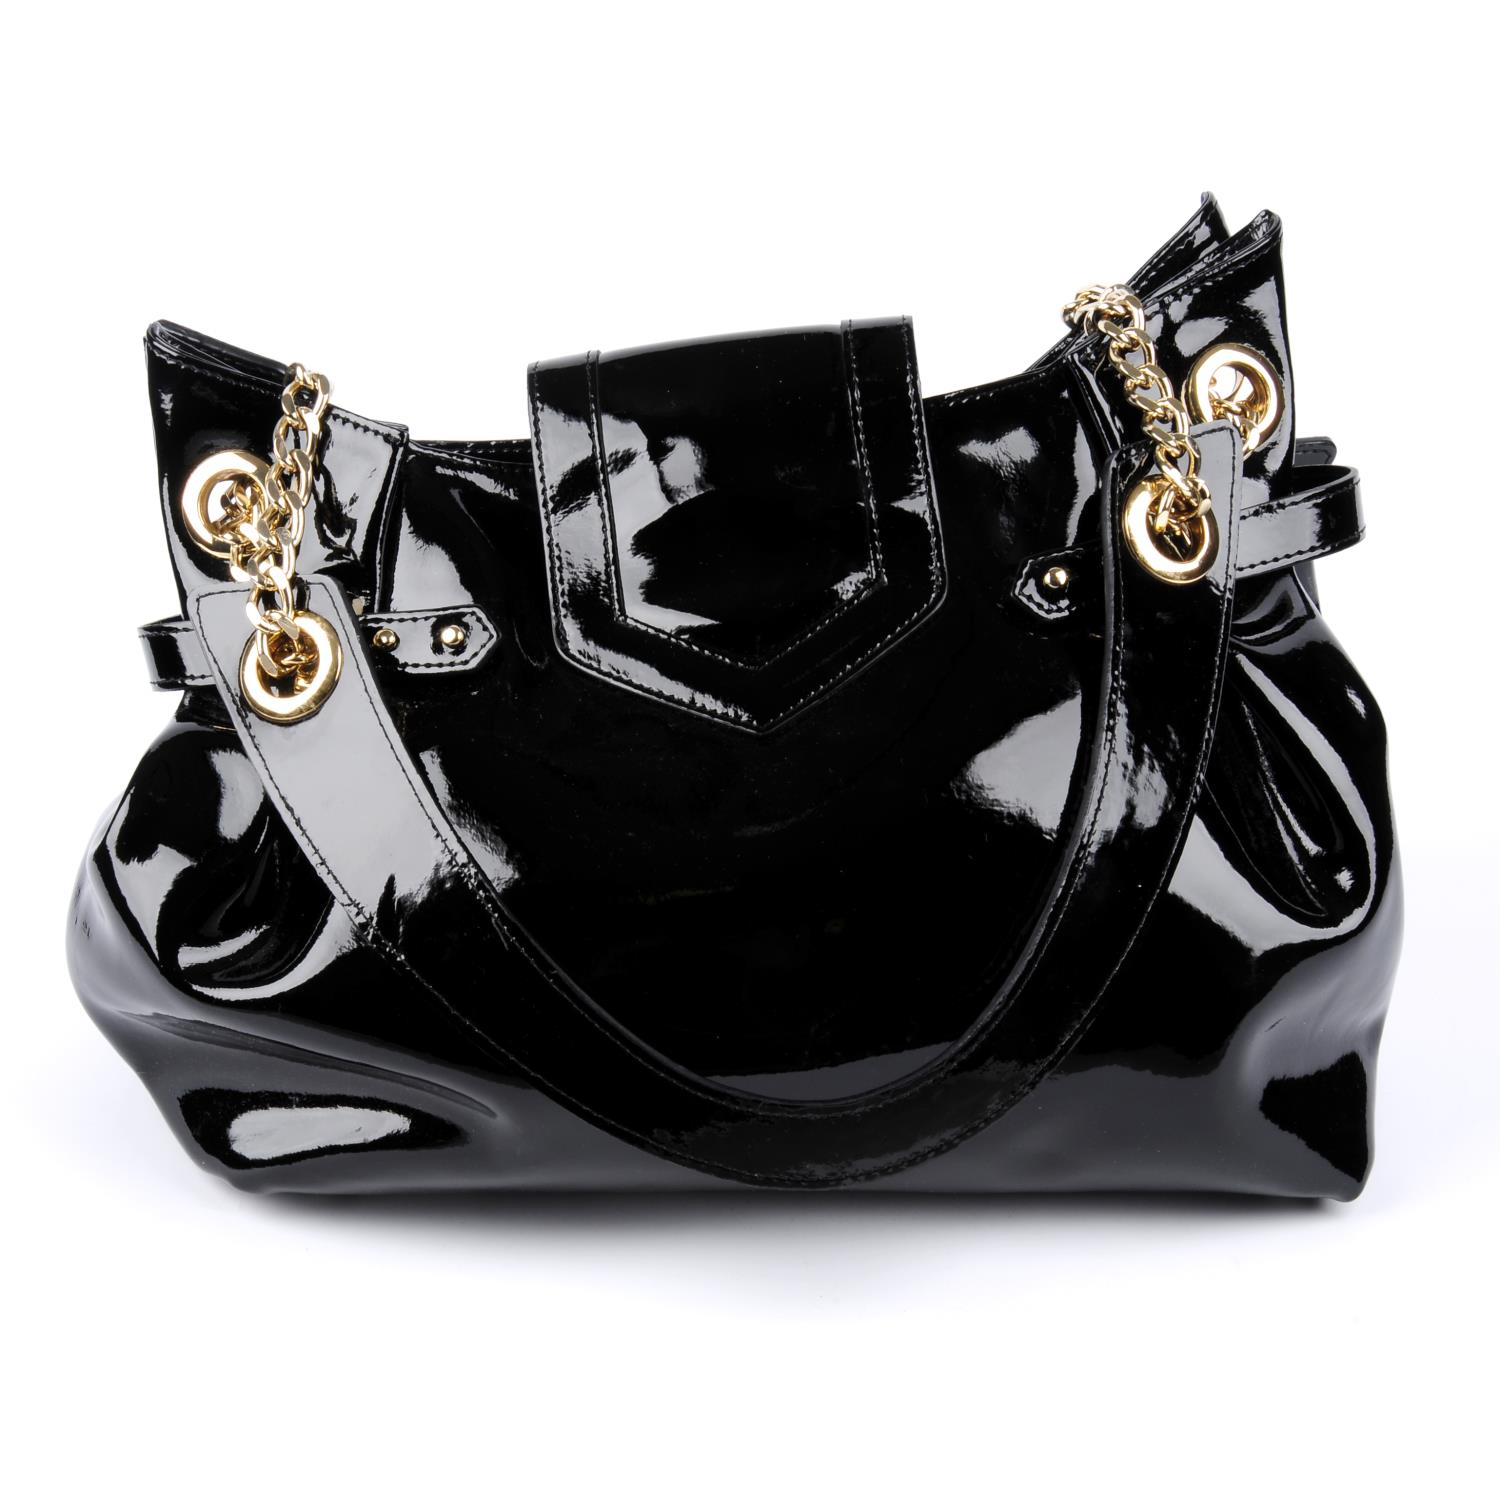 ASPINAL LONDON - a patent leather Barbarella handbag. - Image 2 of 4